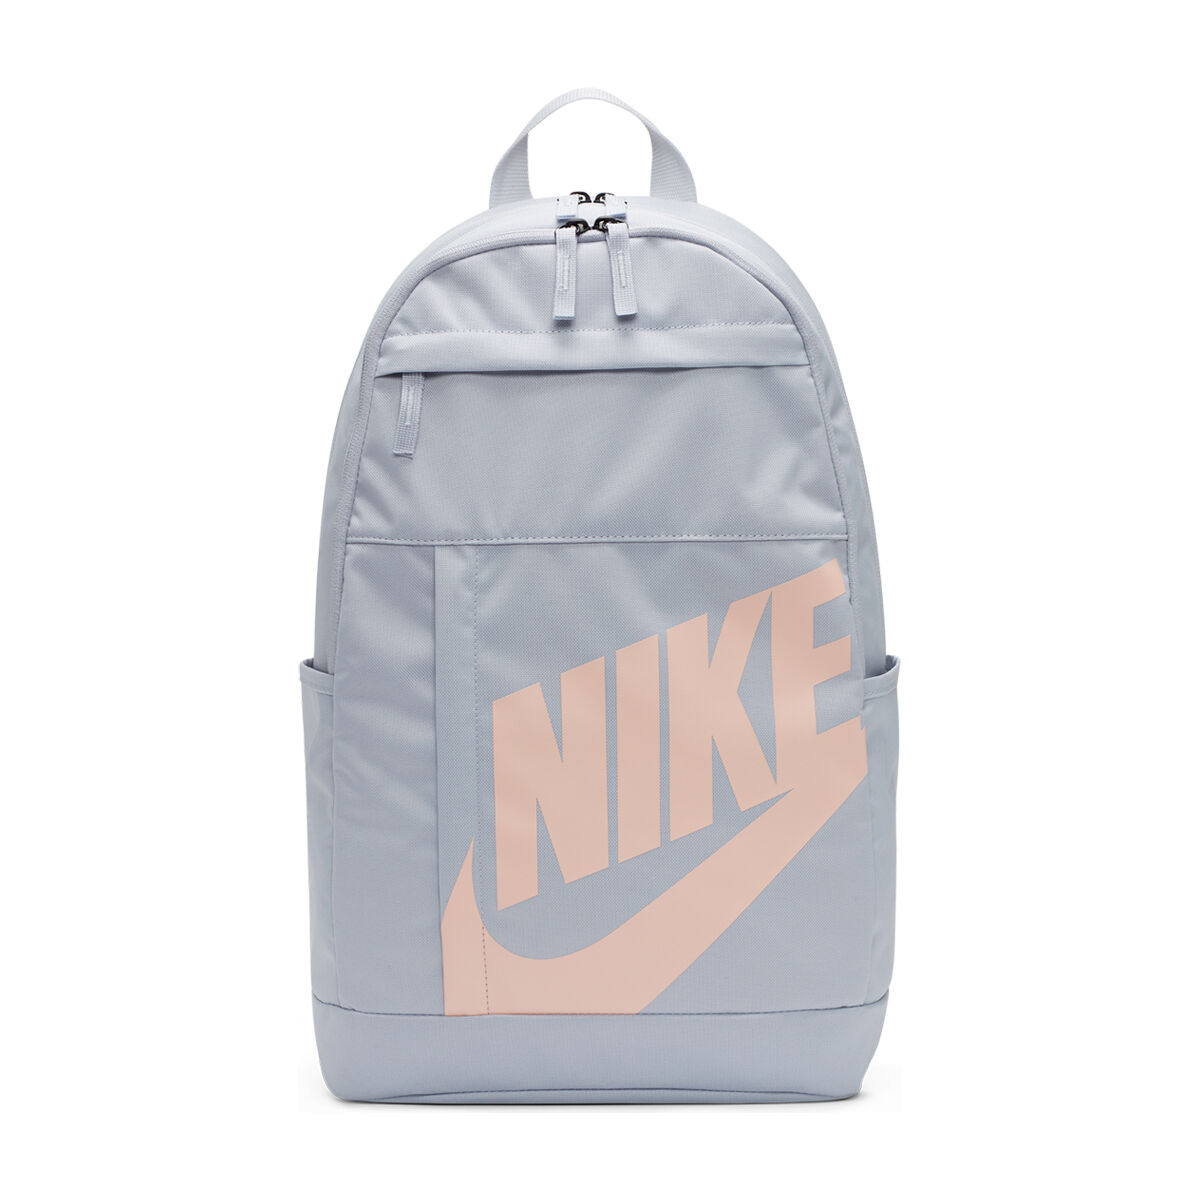 nike school bags for girls